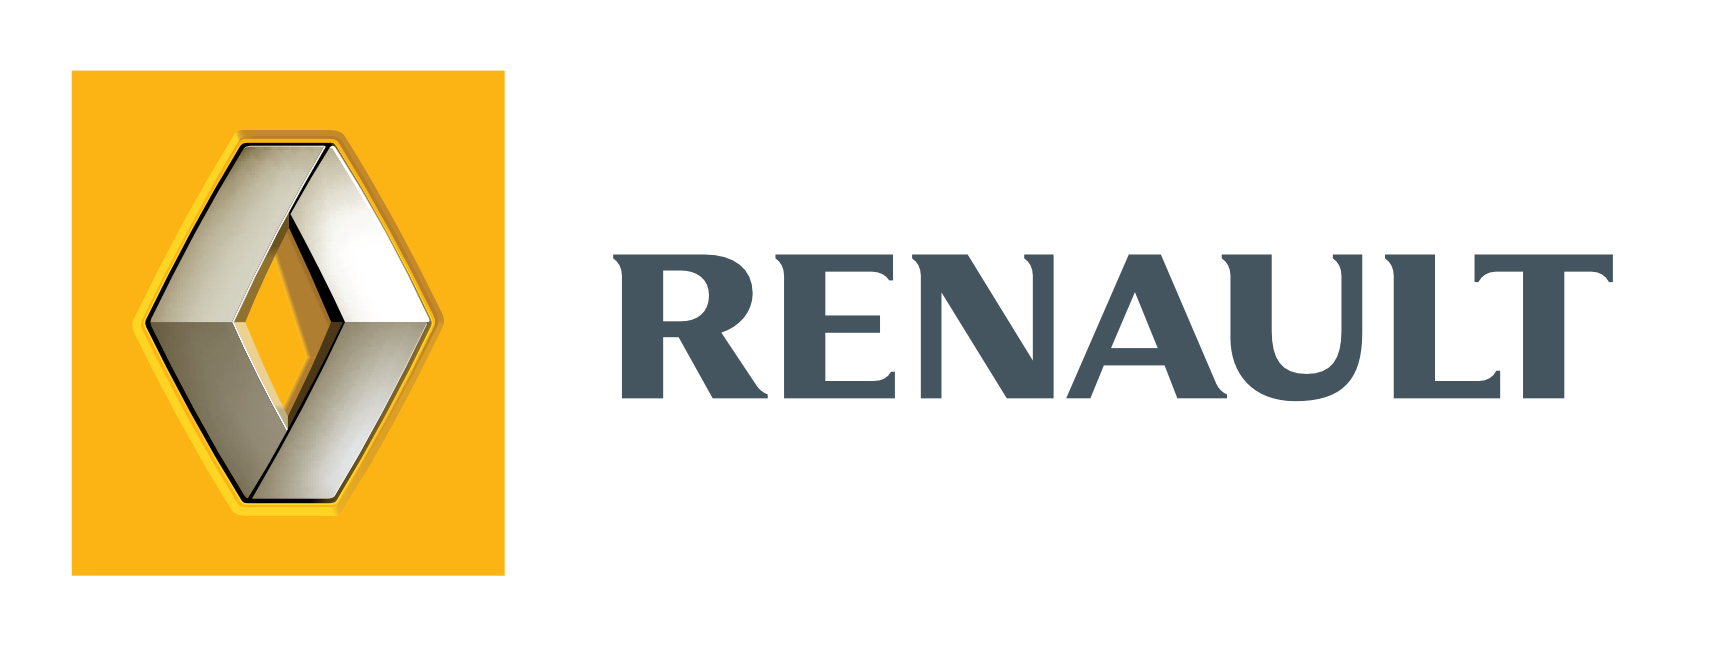 Le Groupe Renault confirme son leadership